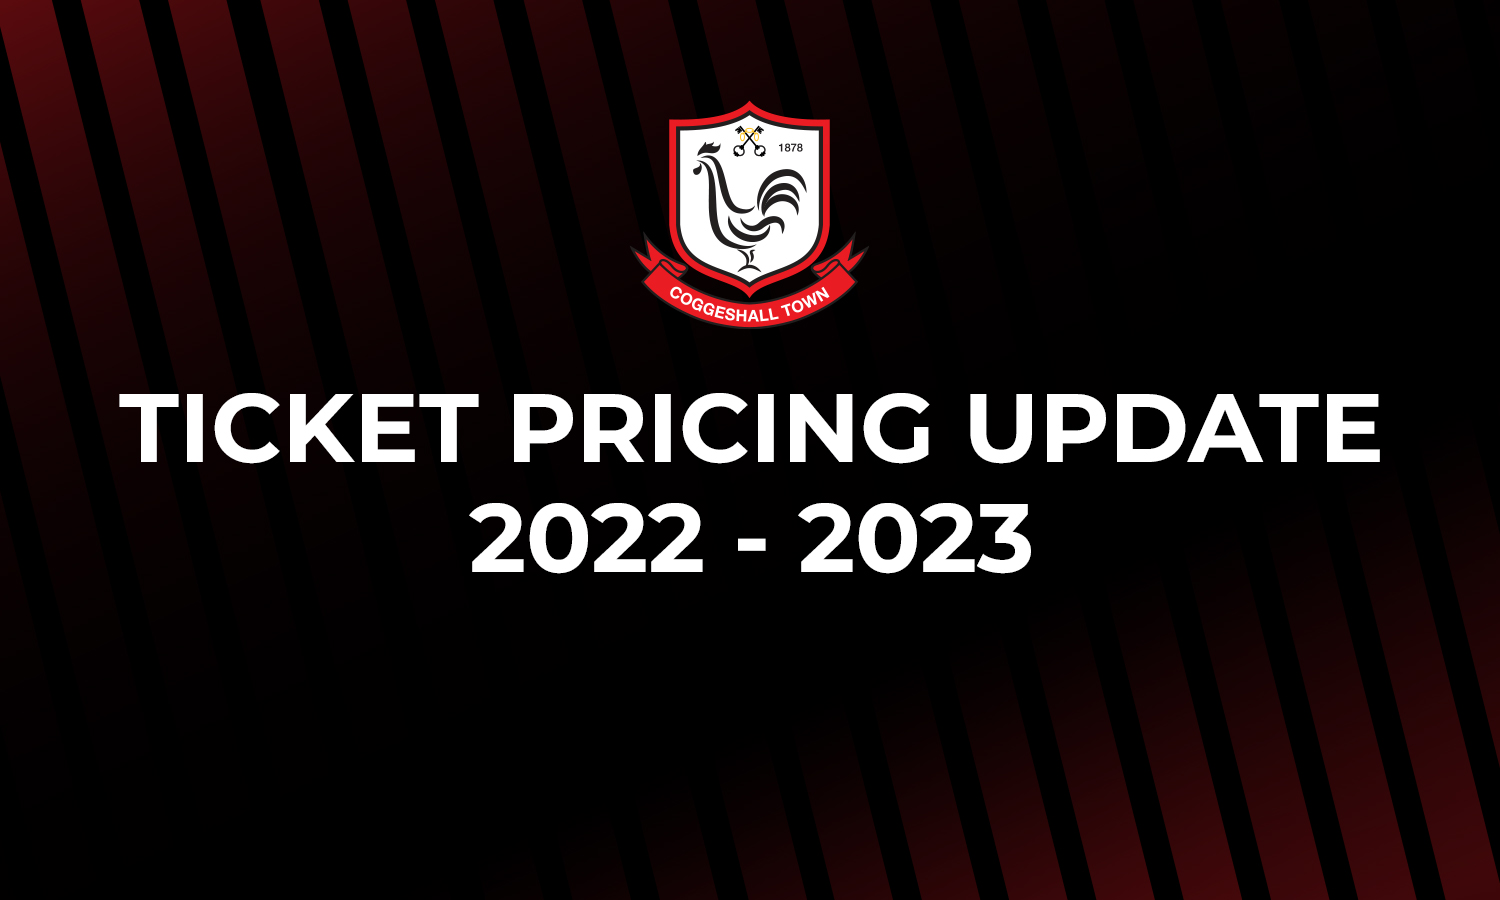 Ticket Pricing Update 2022/2023